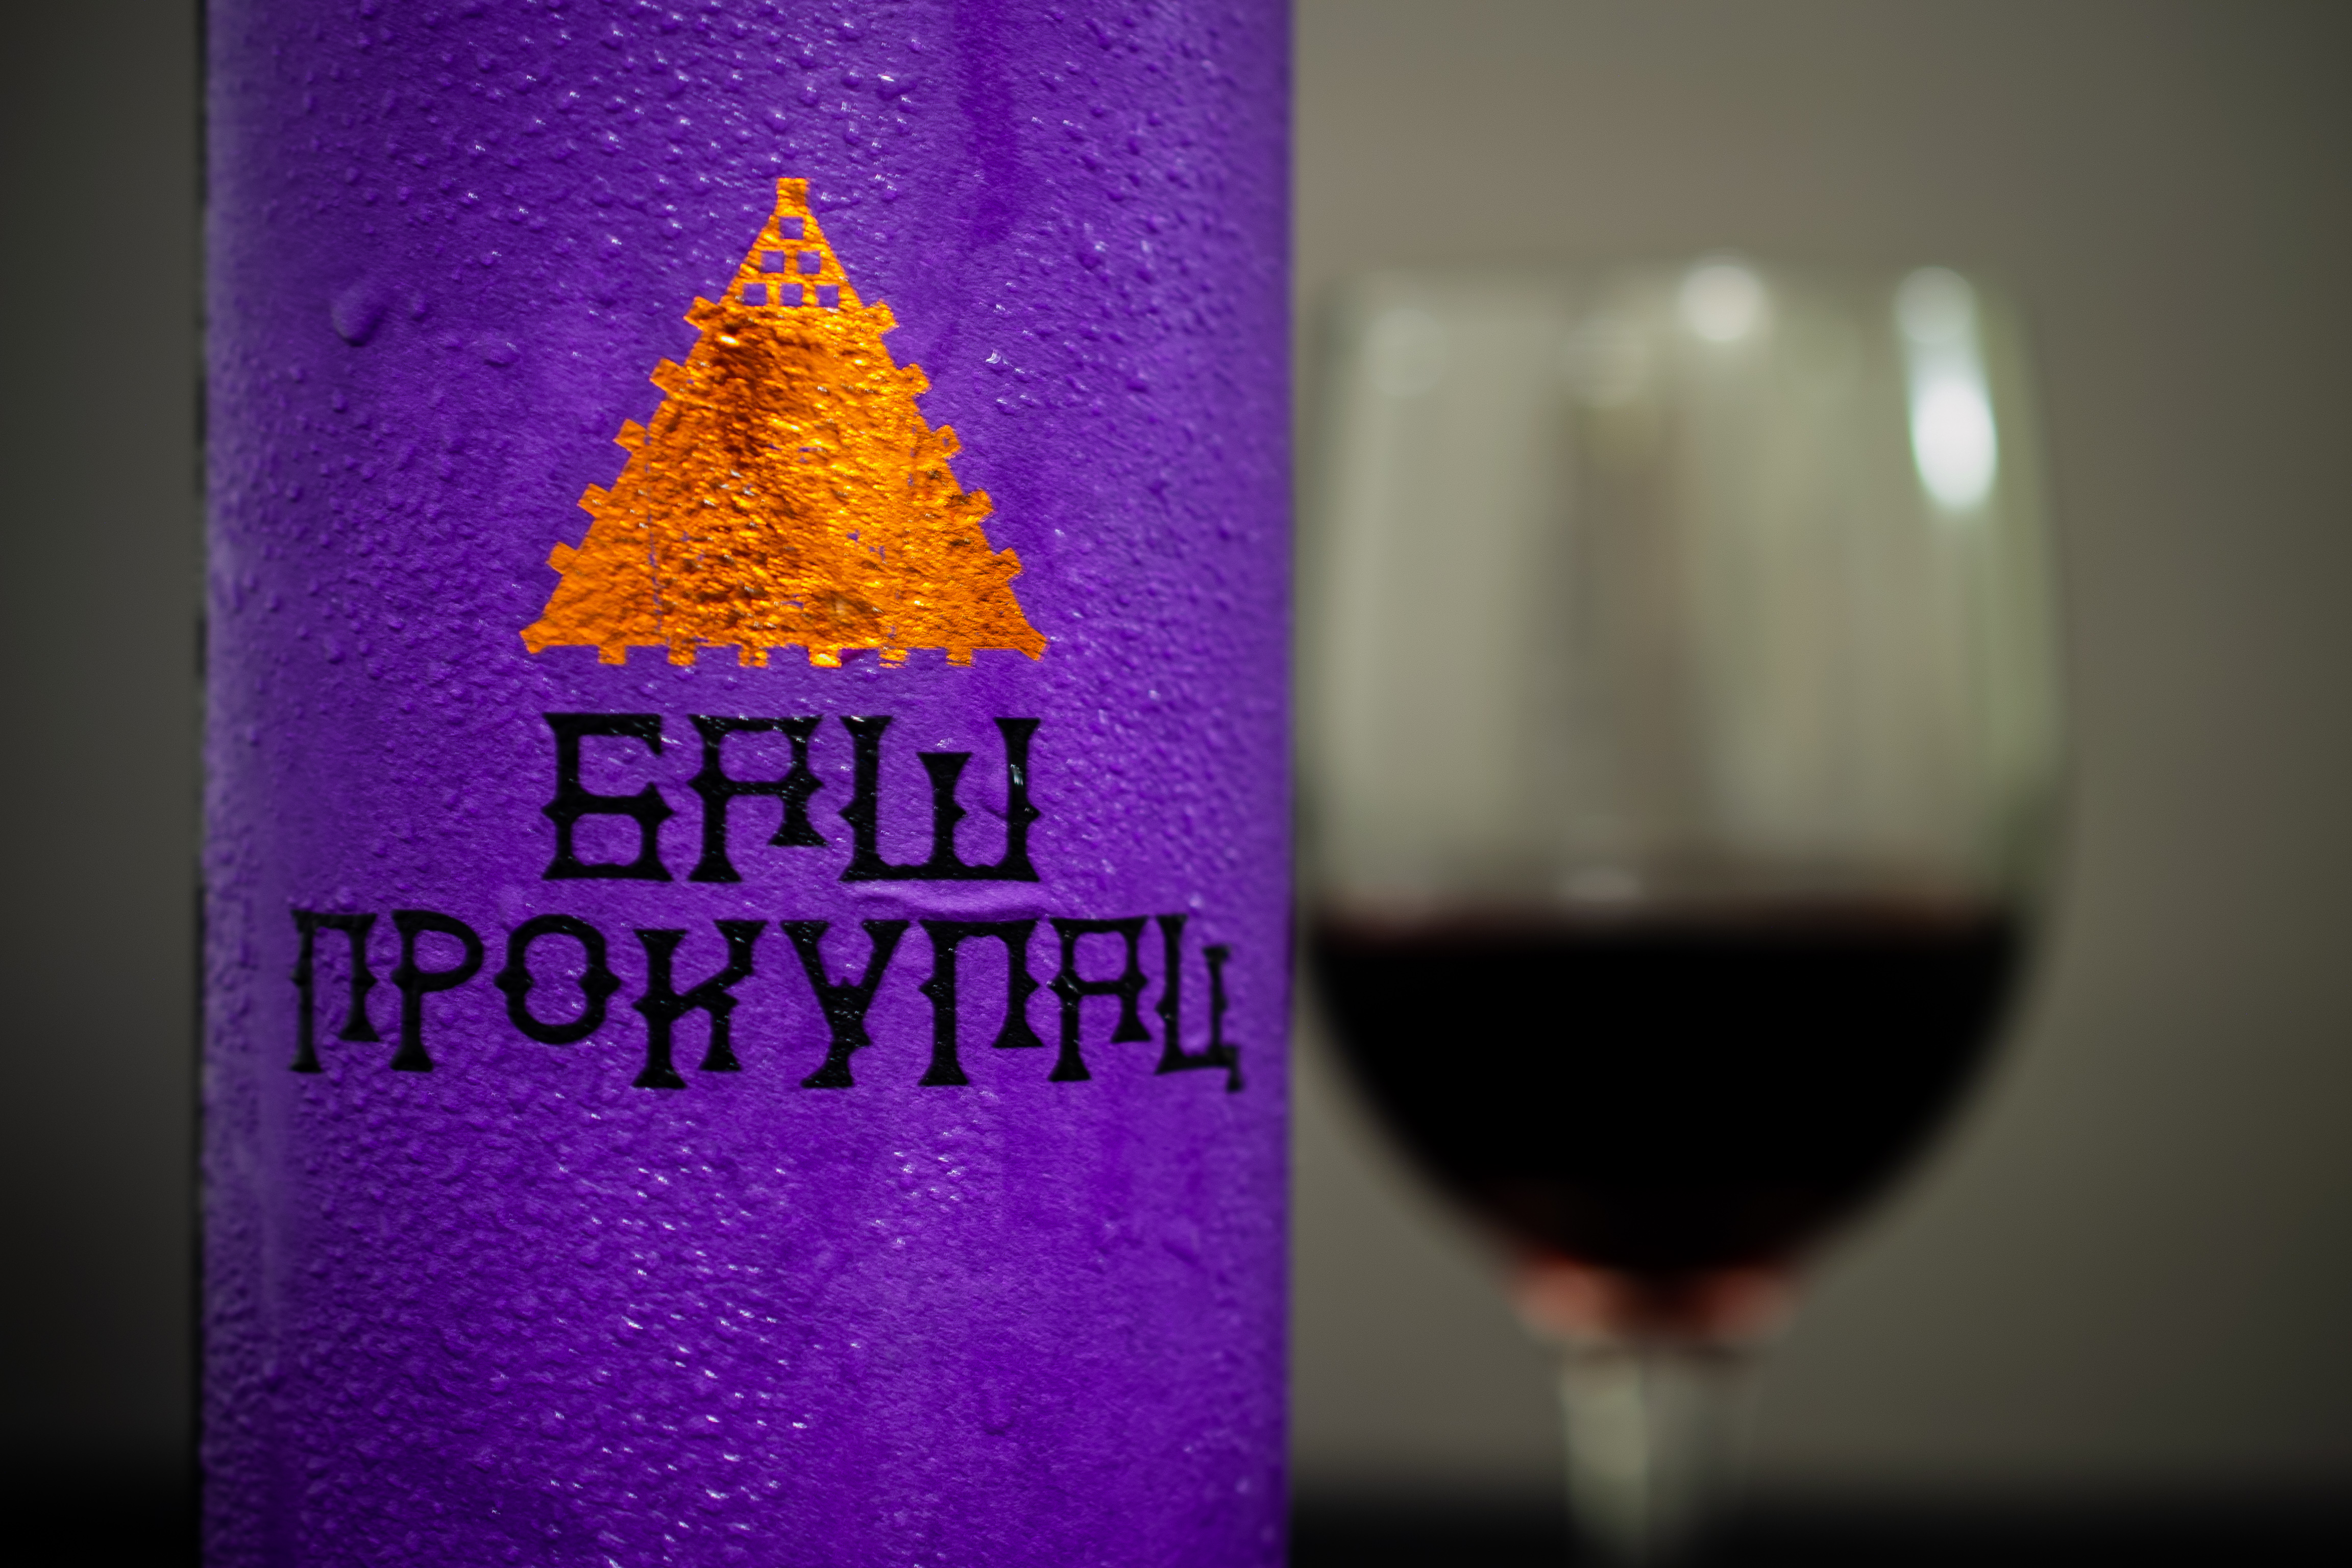 Red wine bottle glass Prokupac Serbian wine Janko Podrum